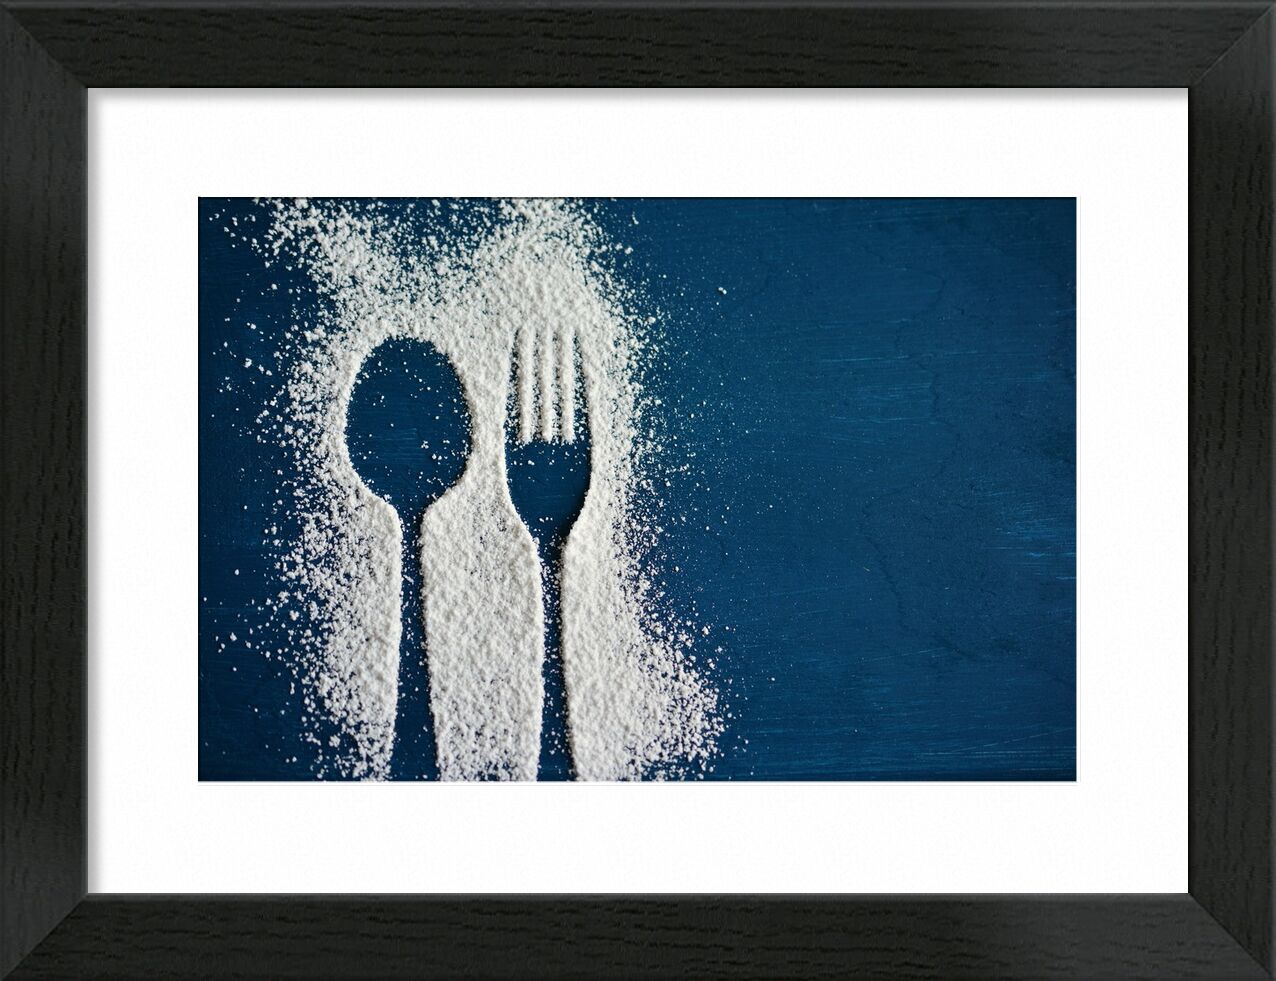 Salt and cutlery from Pierre Gaultier, Prodi Art, blue, table, salt, spoon, fork